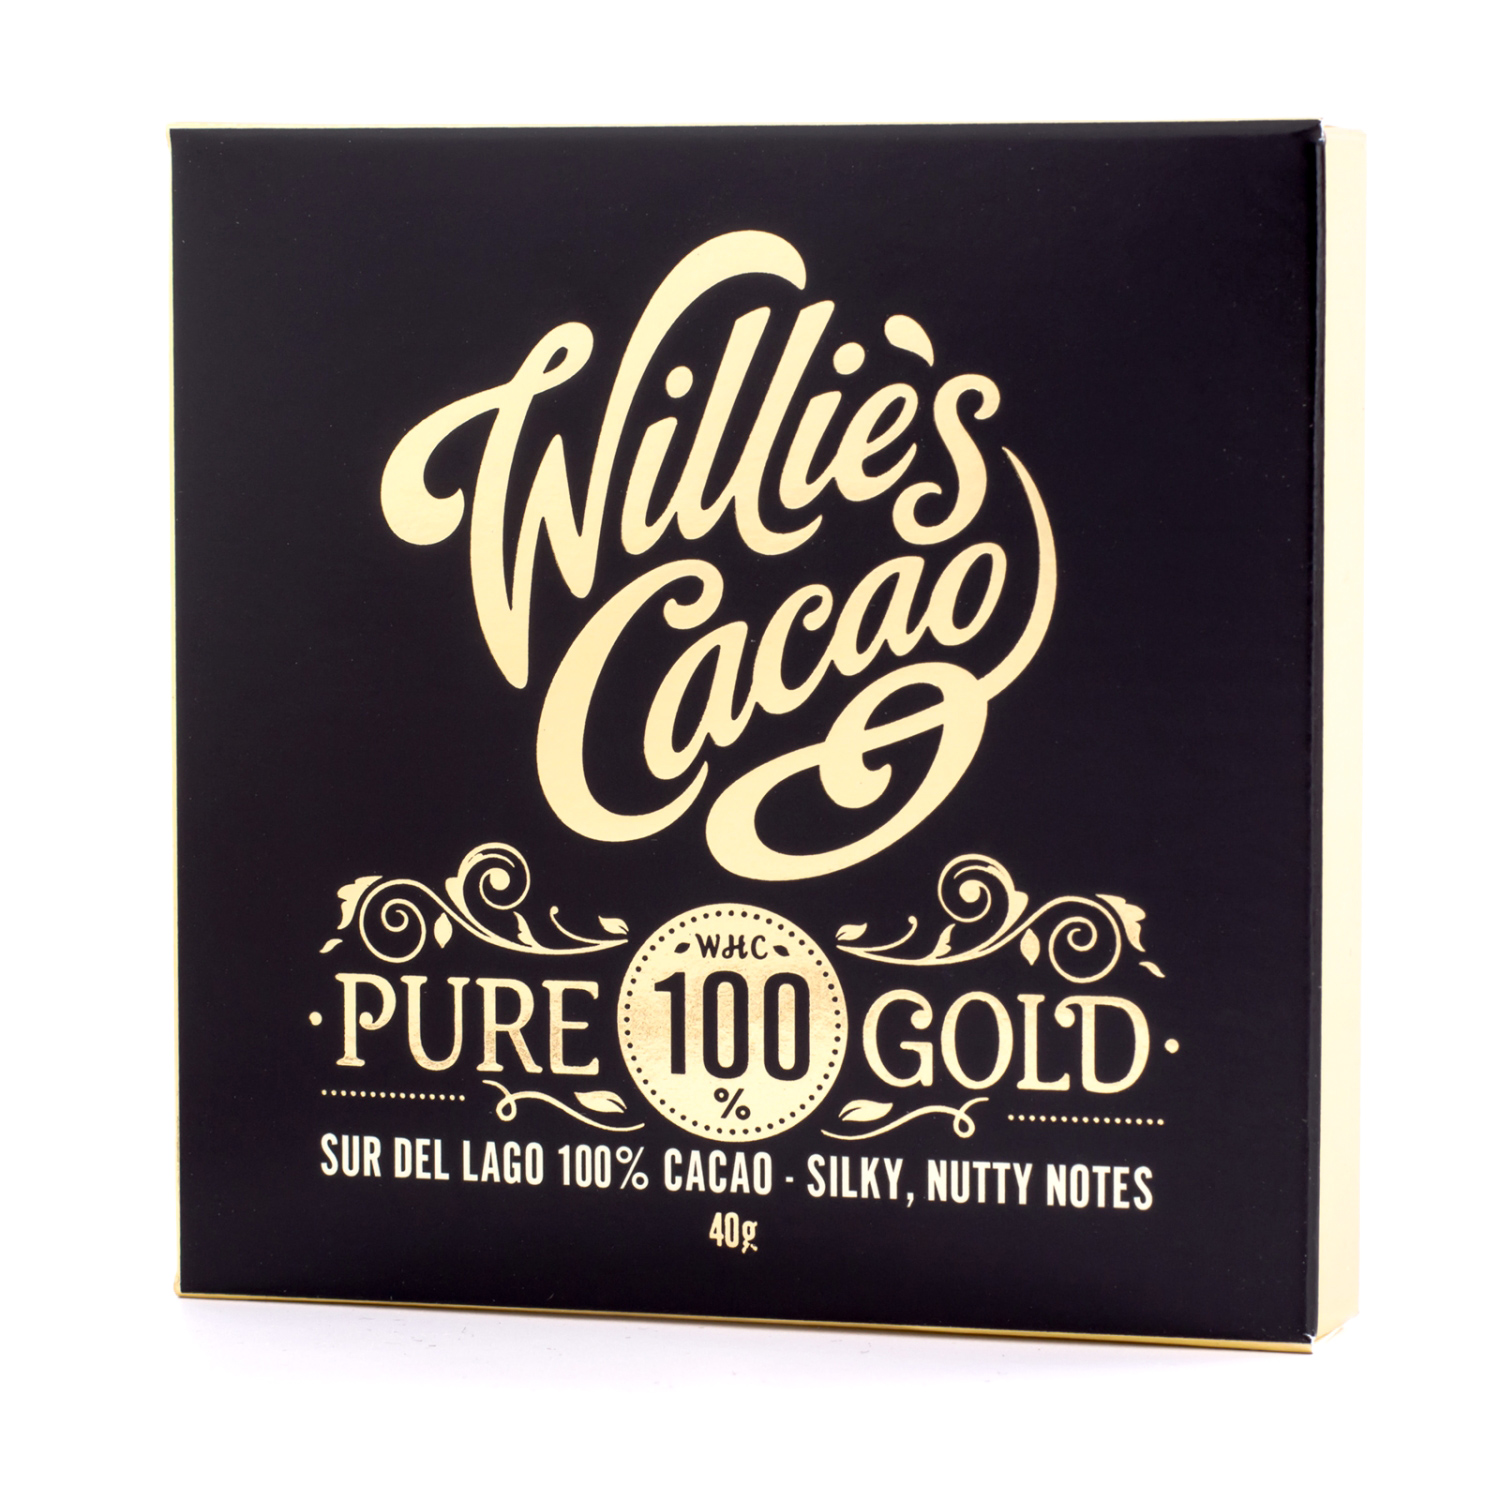 Willie's Cacao - 100% Pure Gold Venezuela 40g